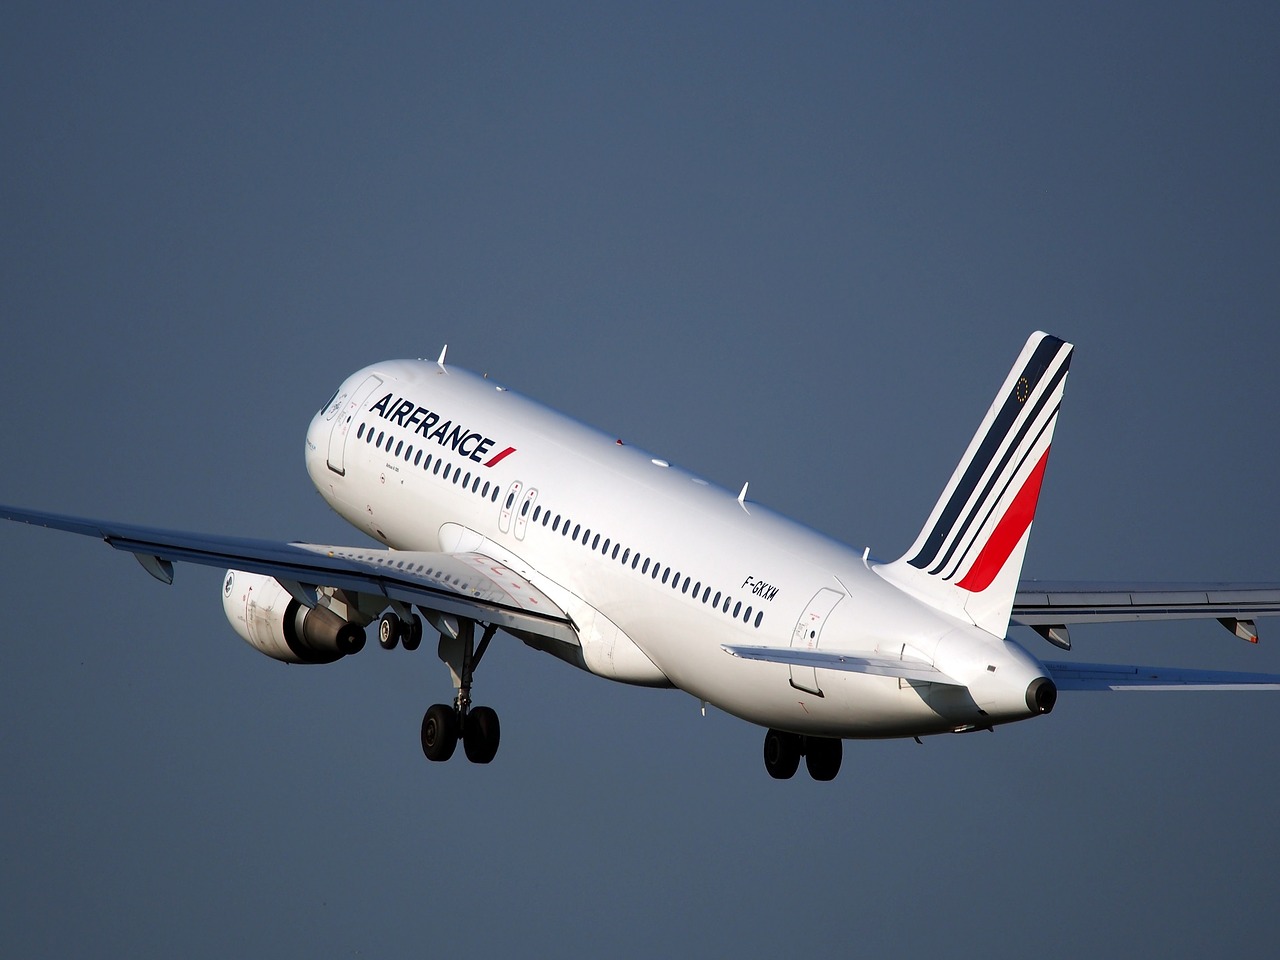 Air France : la direction transitoire sera connue cette semaine